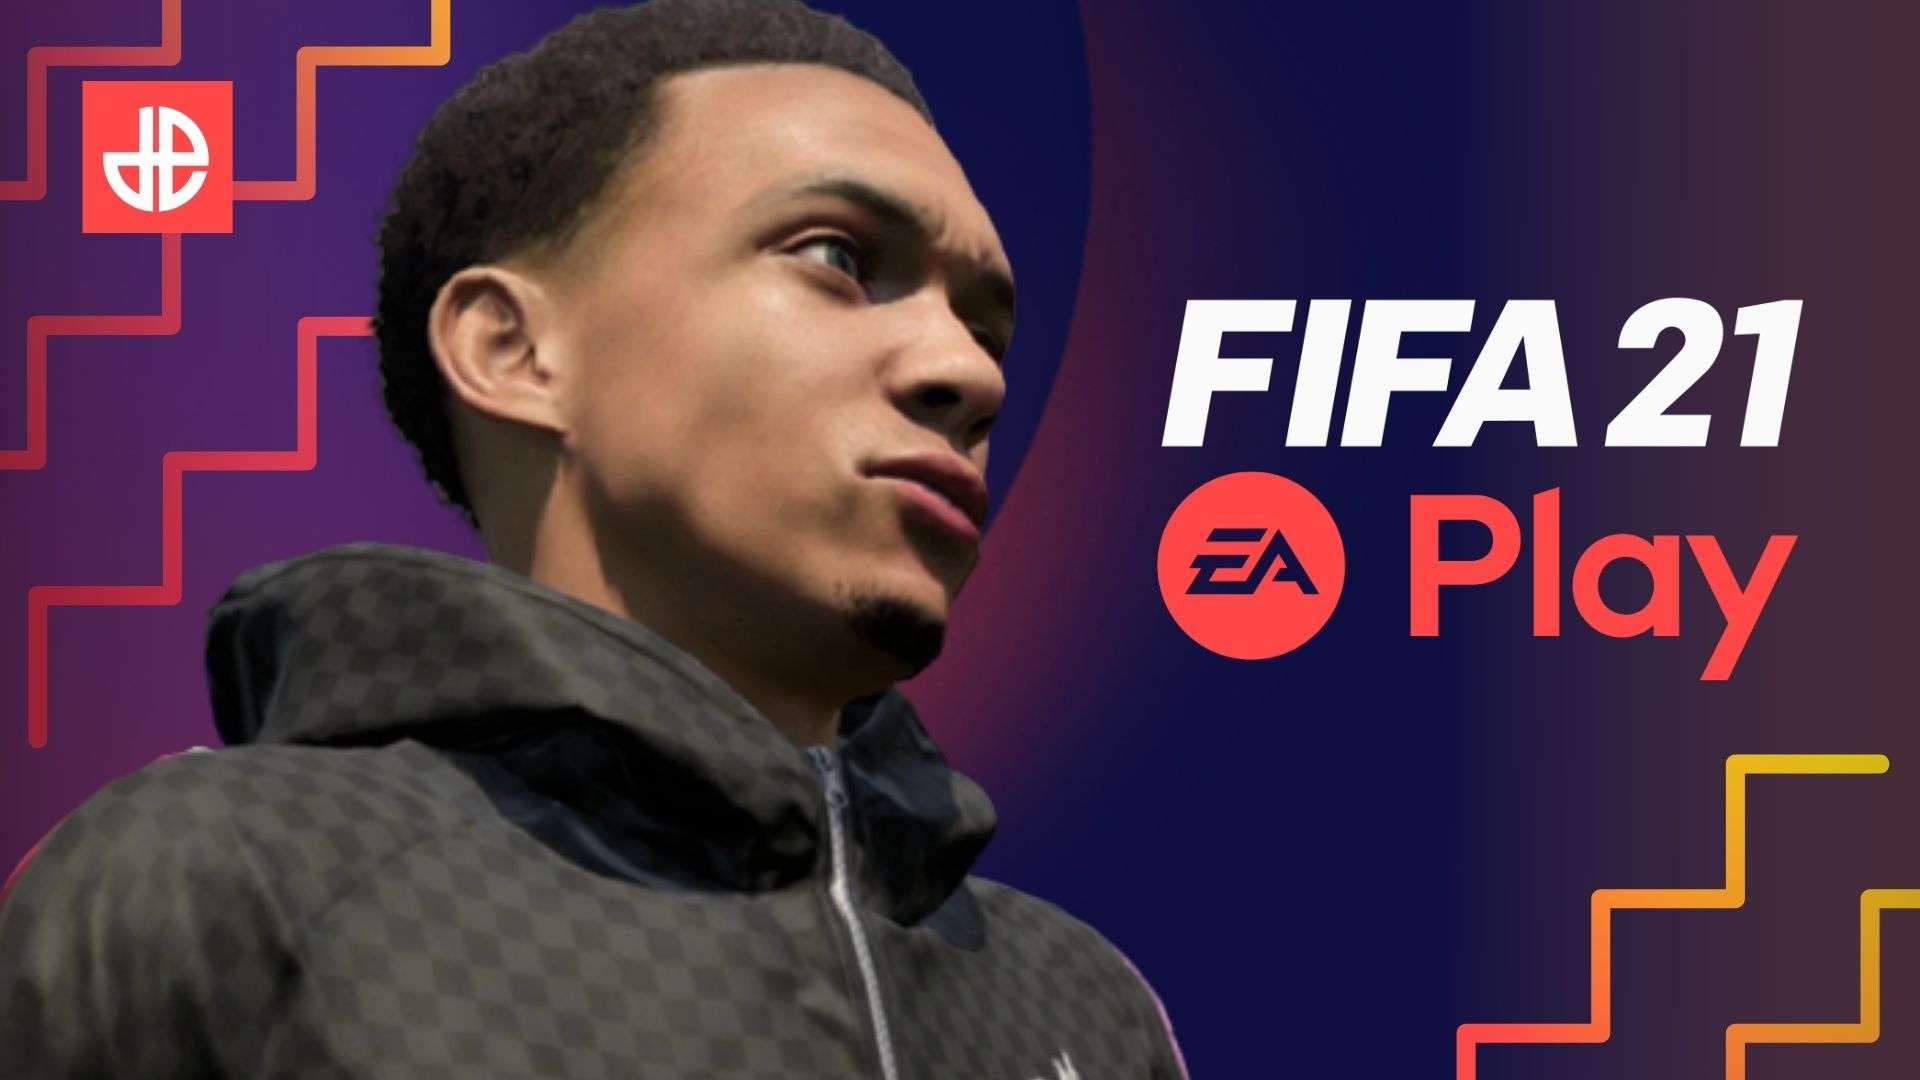 Trent Alexander-Arnold in FIFA 21 EA Play